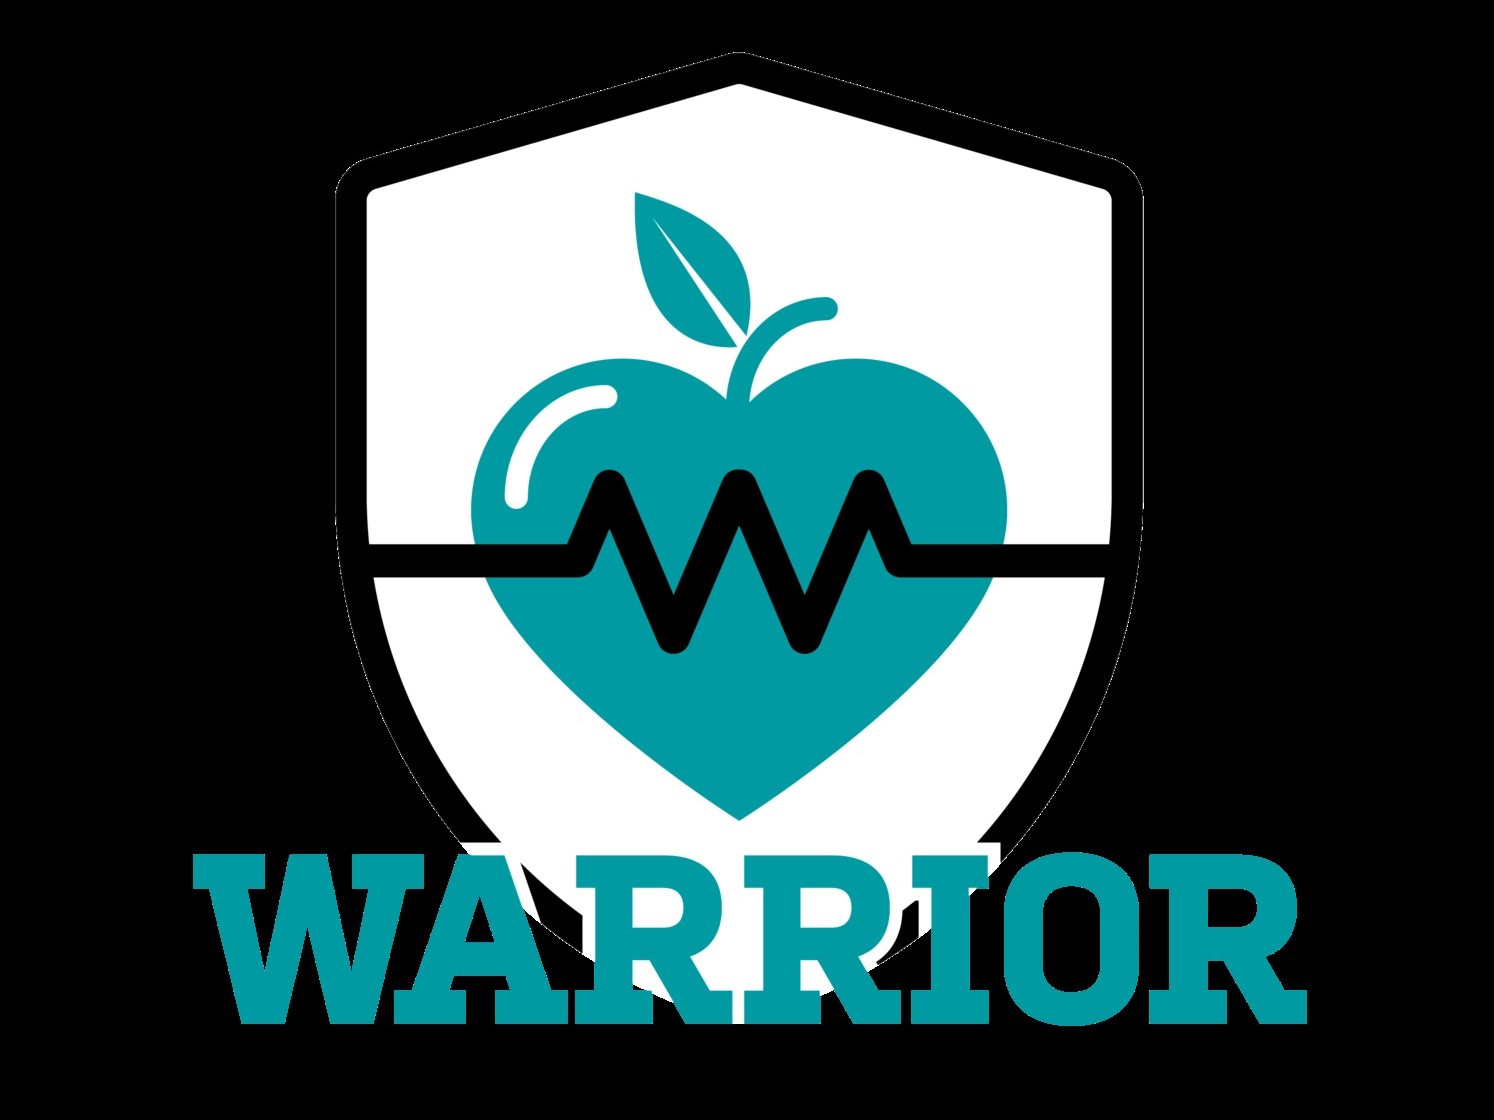 Warrior programme logo